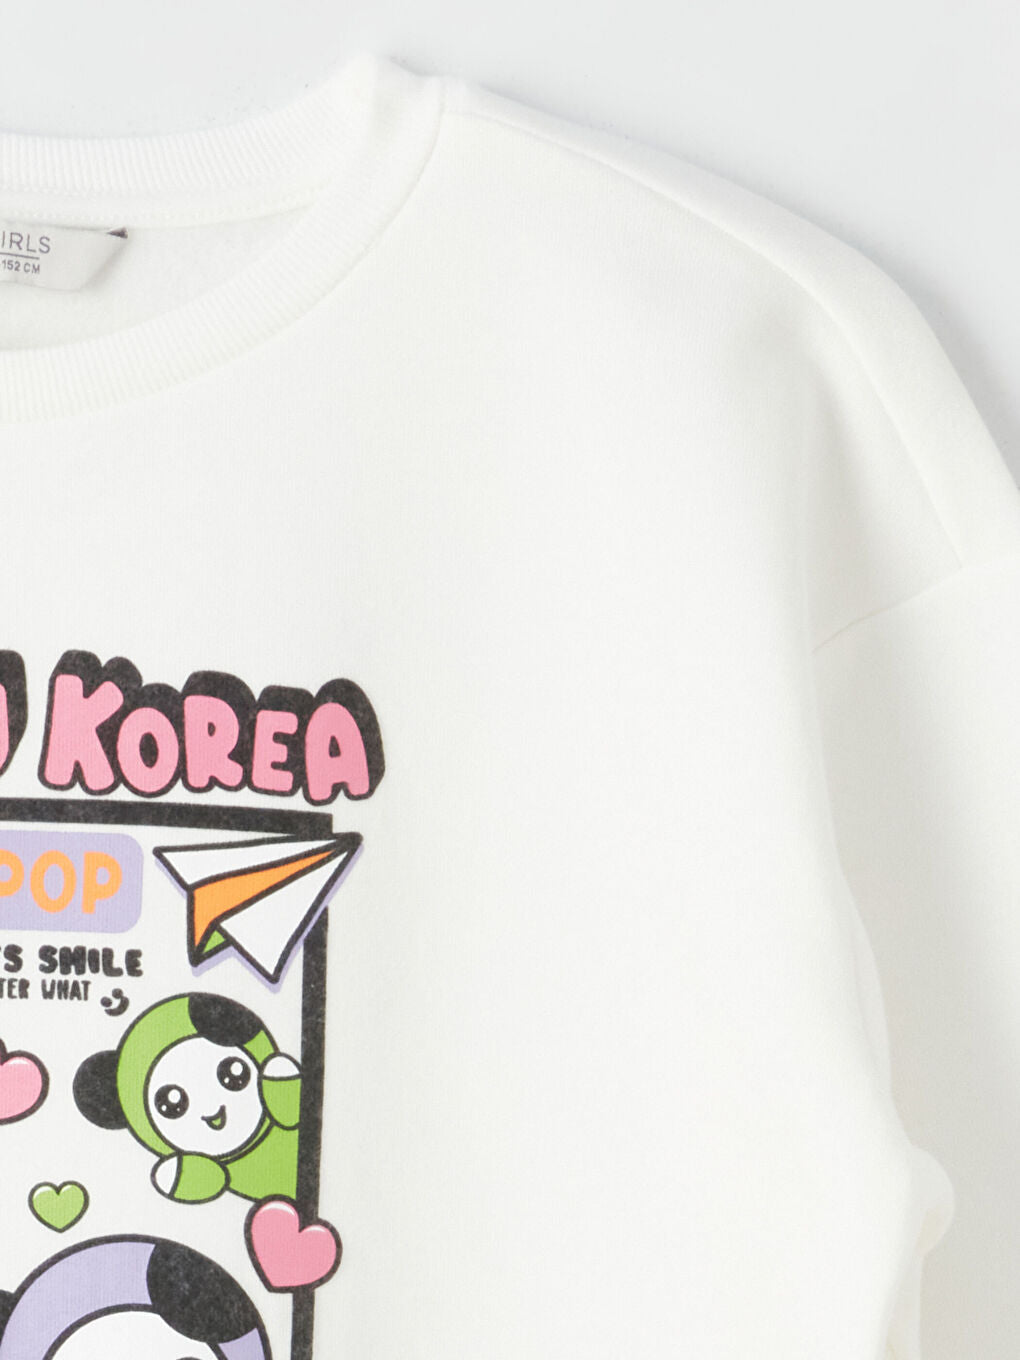 Crew Neck K-Pop Printed Long Sleeve Girls Sweatshirt Anime